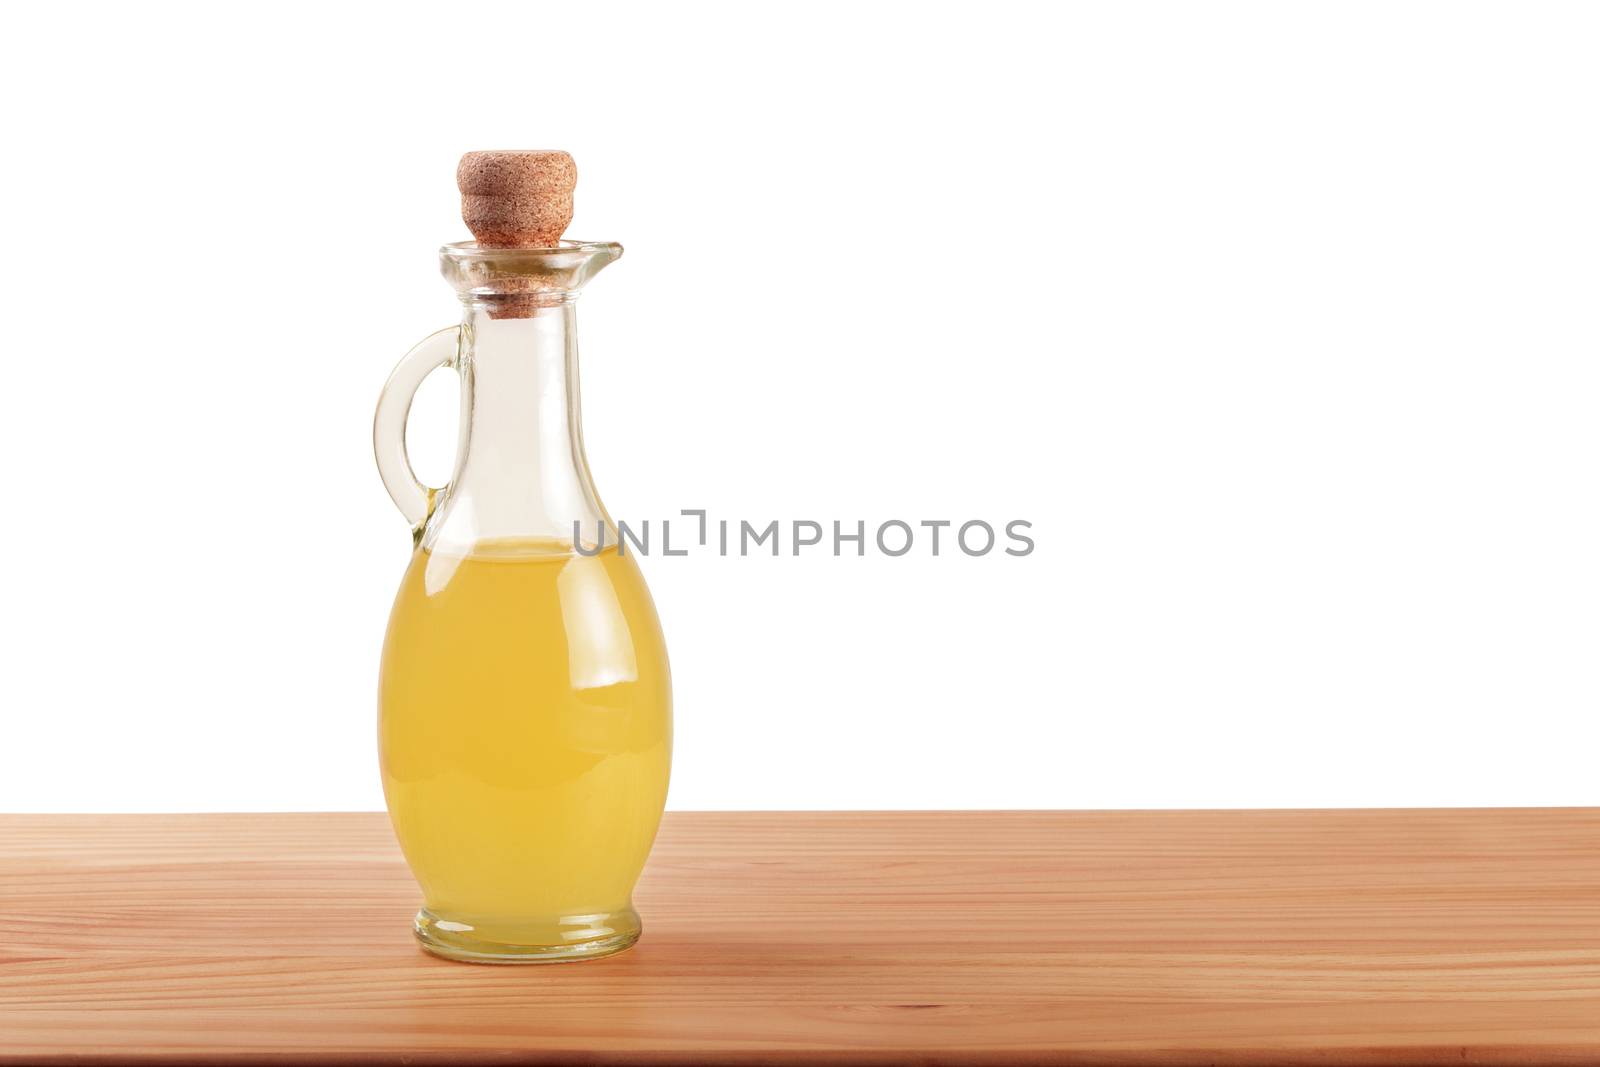 Apple cider vinegar and fresh apple on wooden background